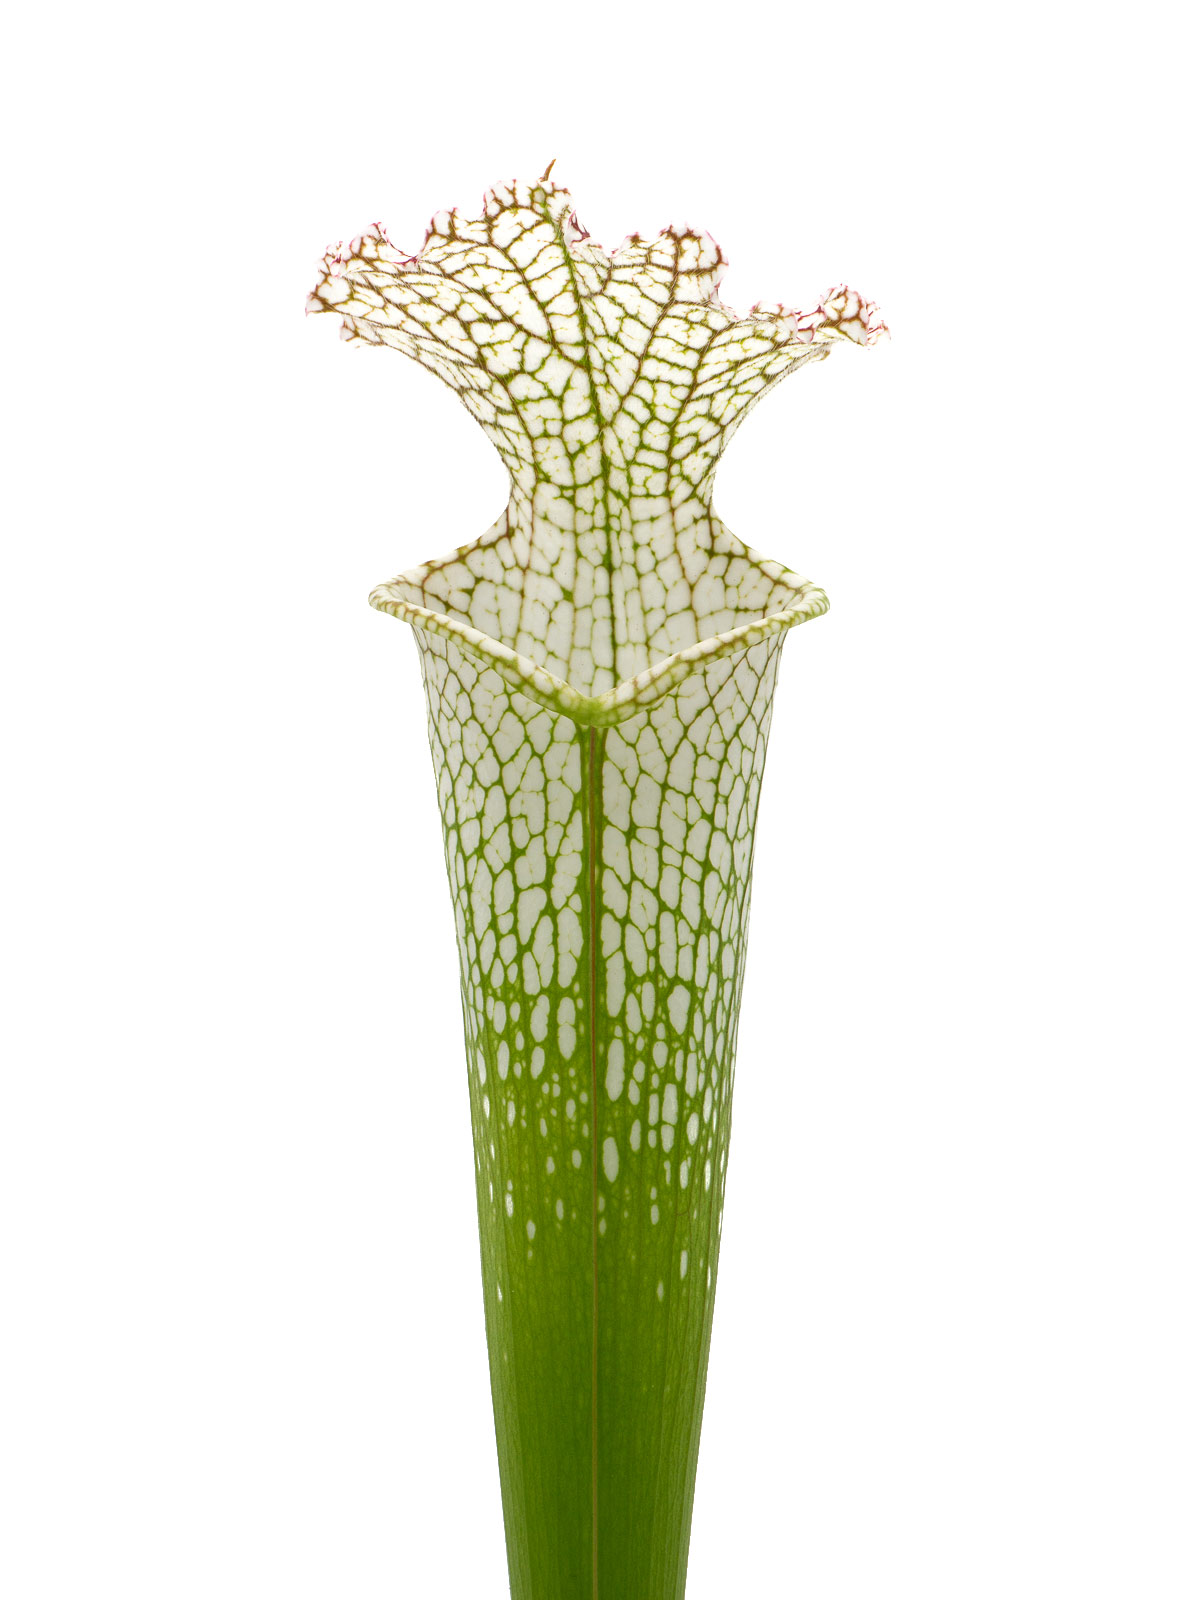 Sarracenia leucophylla - white pubescent form, MS L35A